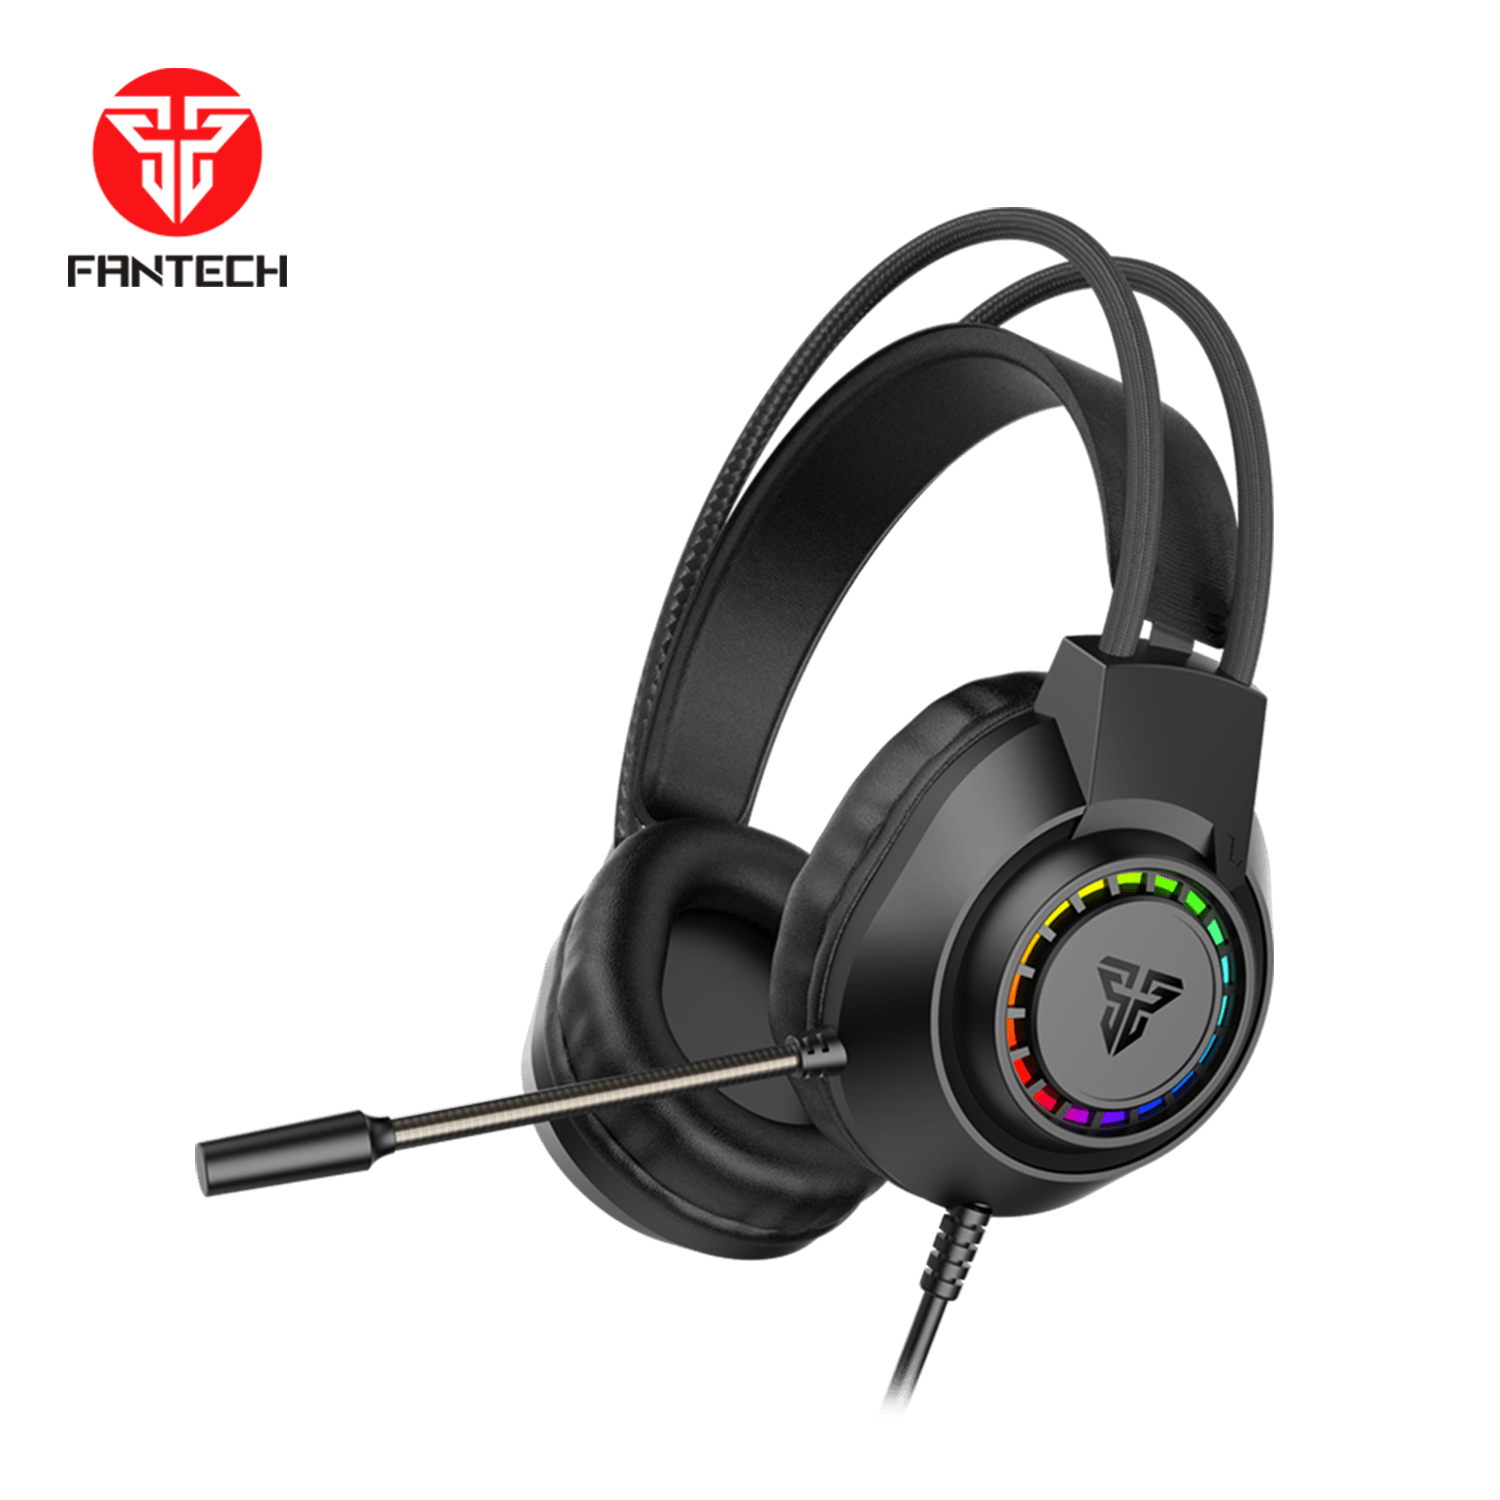 Fantech PORTAL HQ55 3.5mm Jack Headset Gaming RGB JOD 15